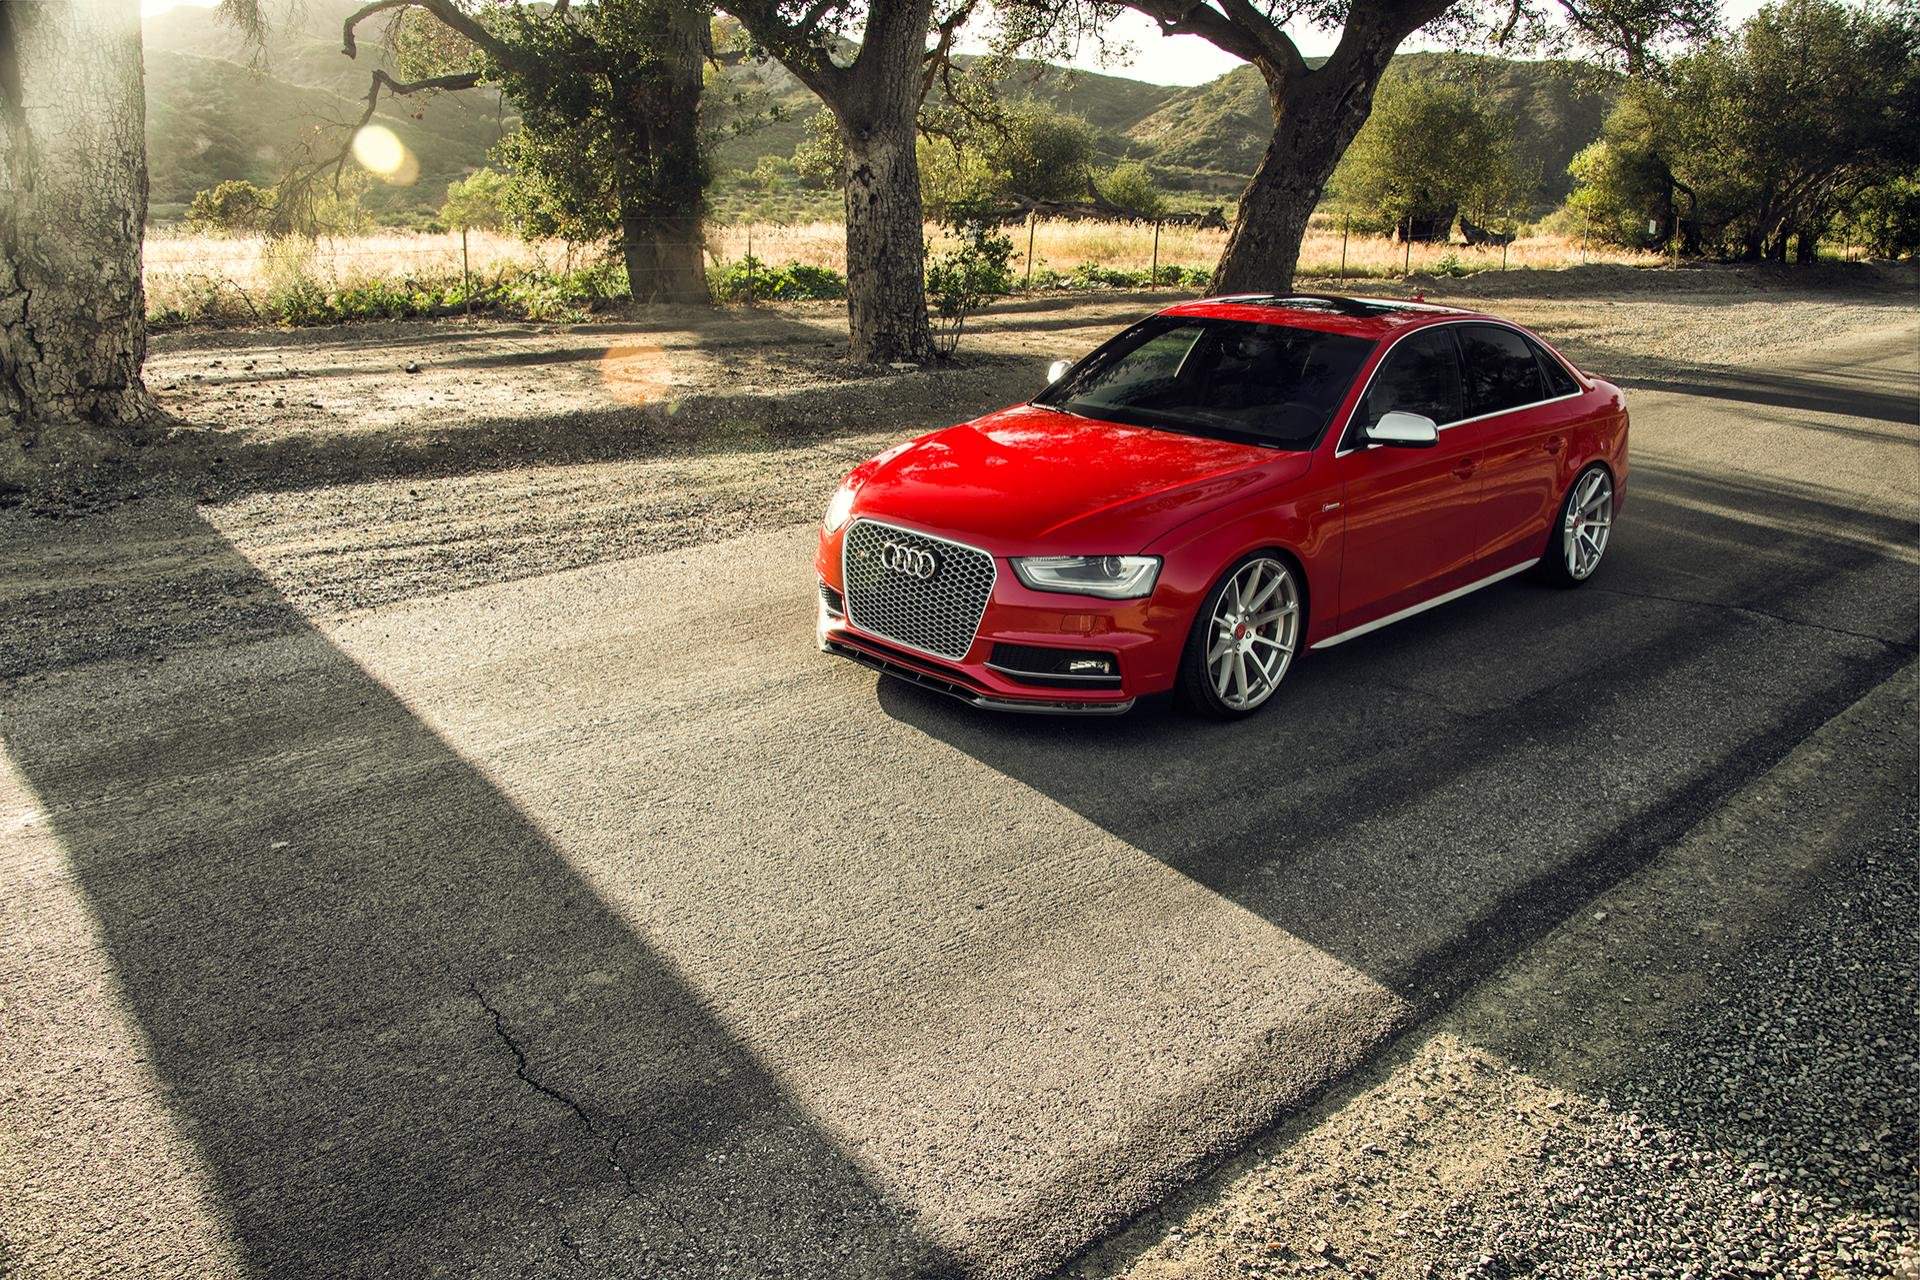 Audi S4 wallpaper HD for desktop background